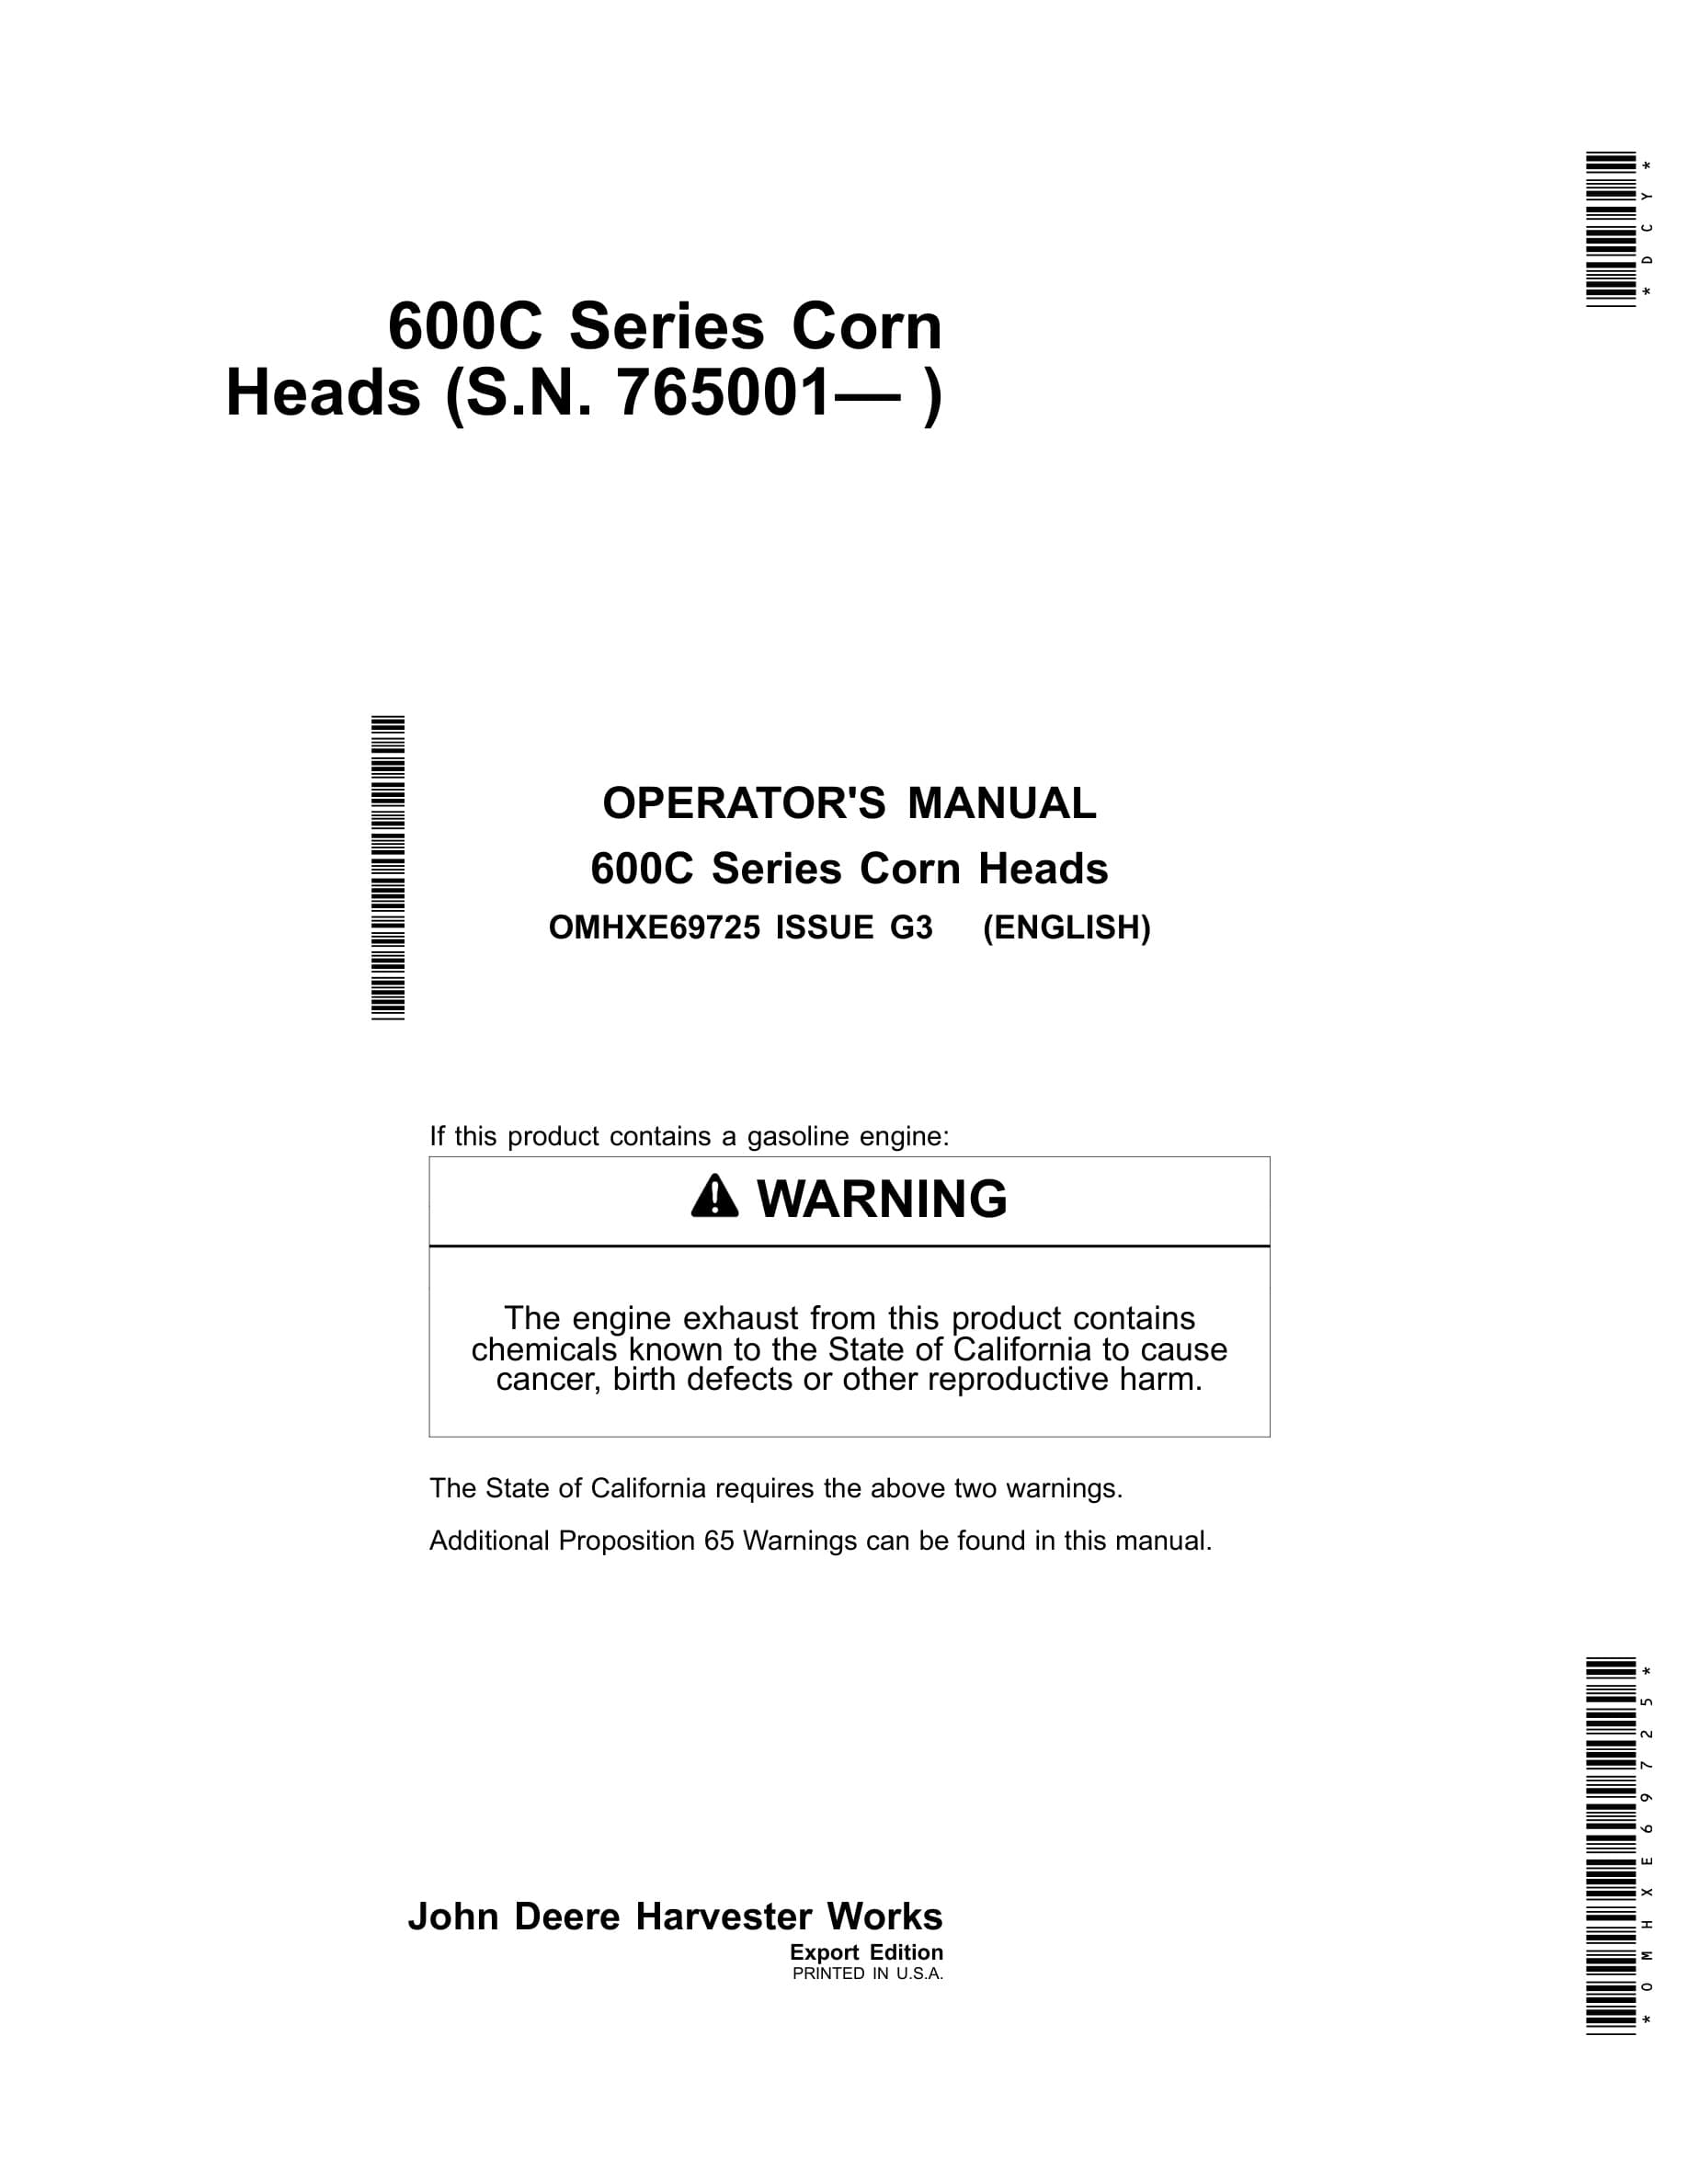 John Deere 600C Series Corn Heads Operator Manual OMHXE69725-1